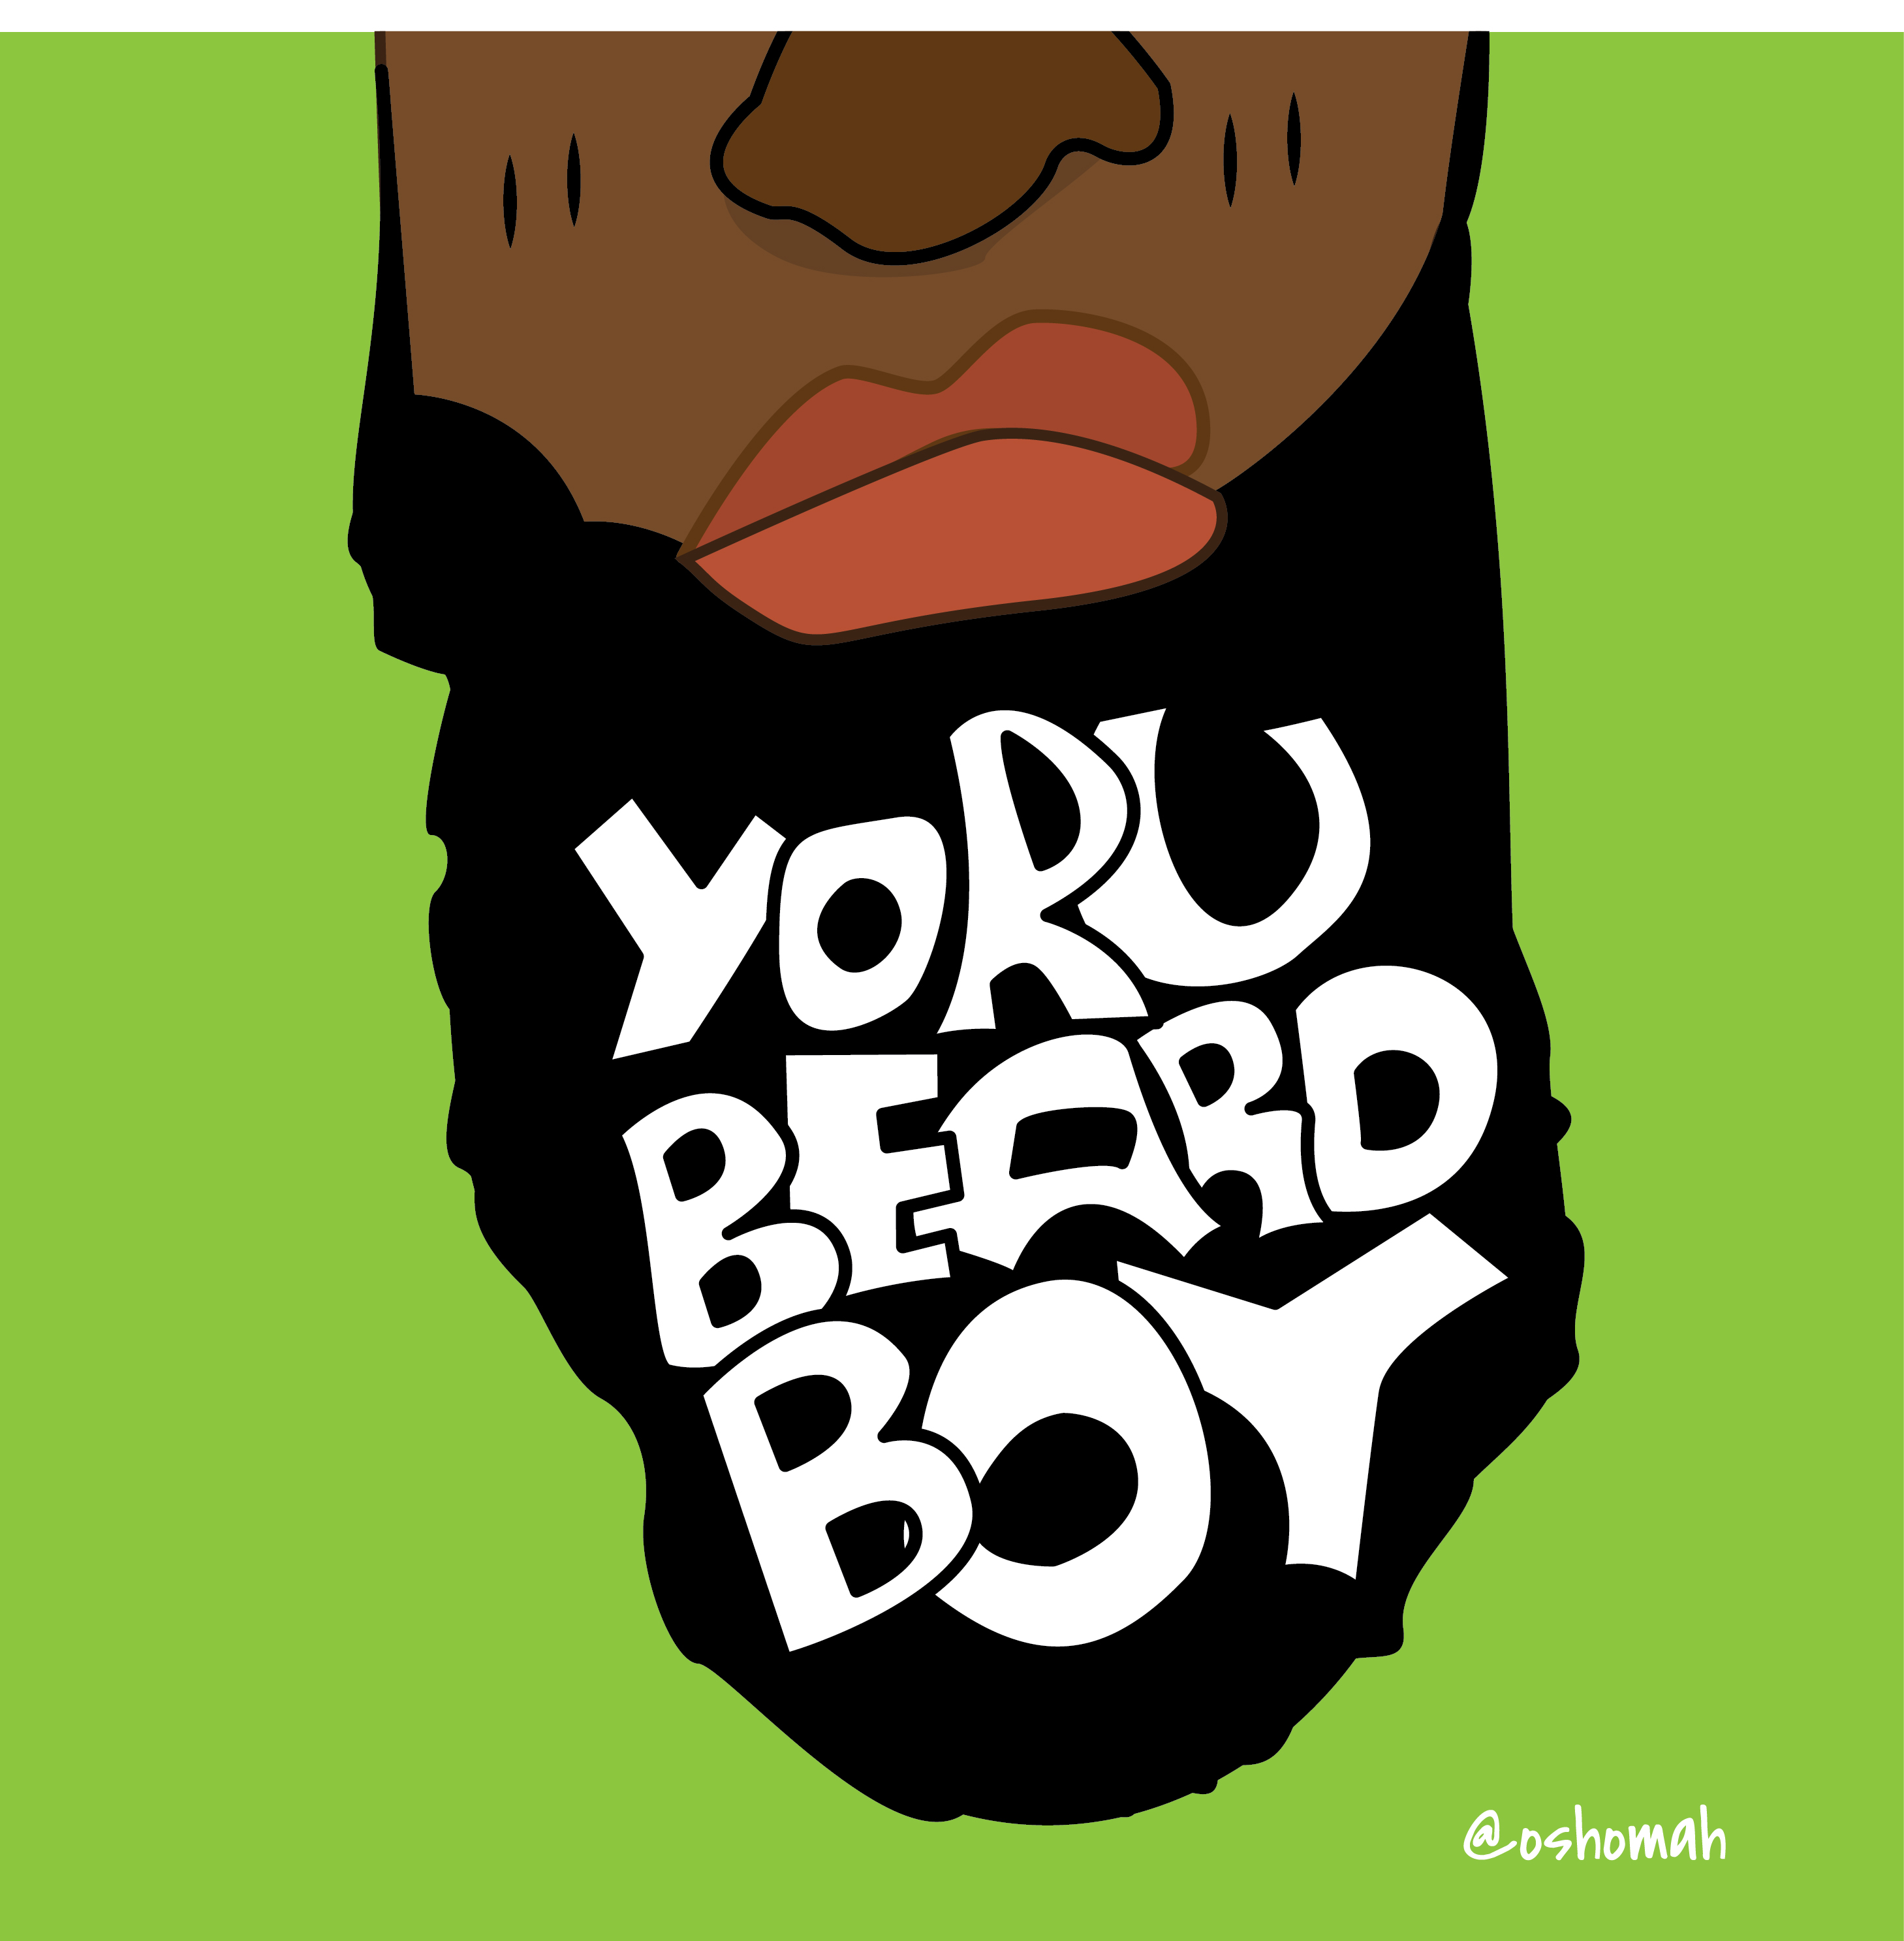 Yorubeard-boy